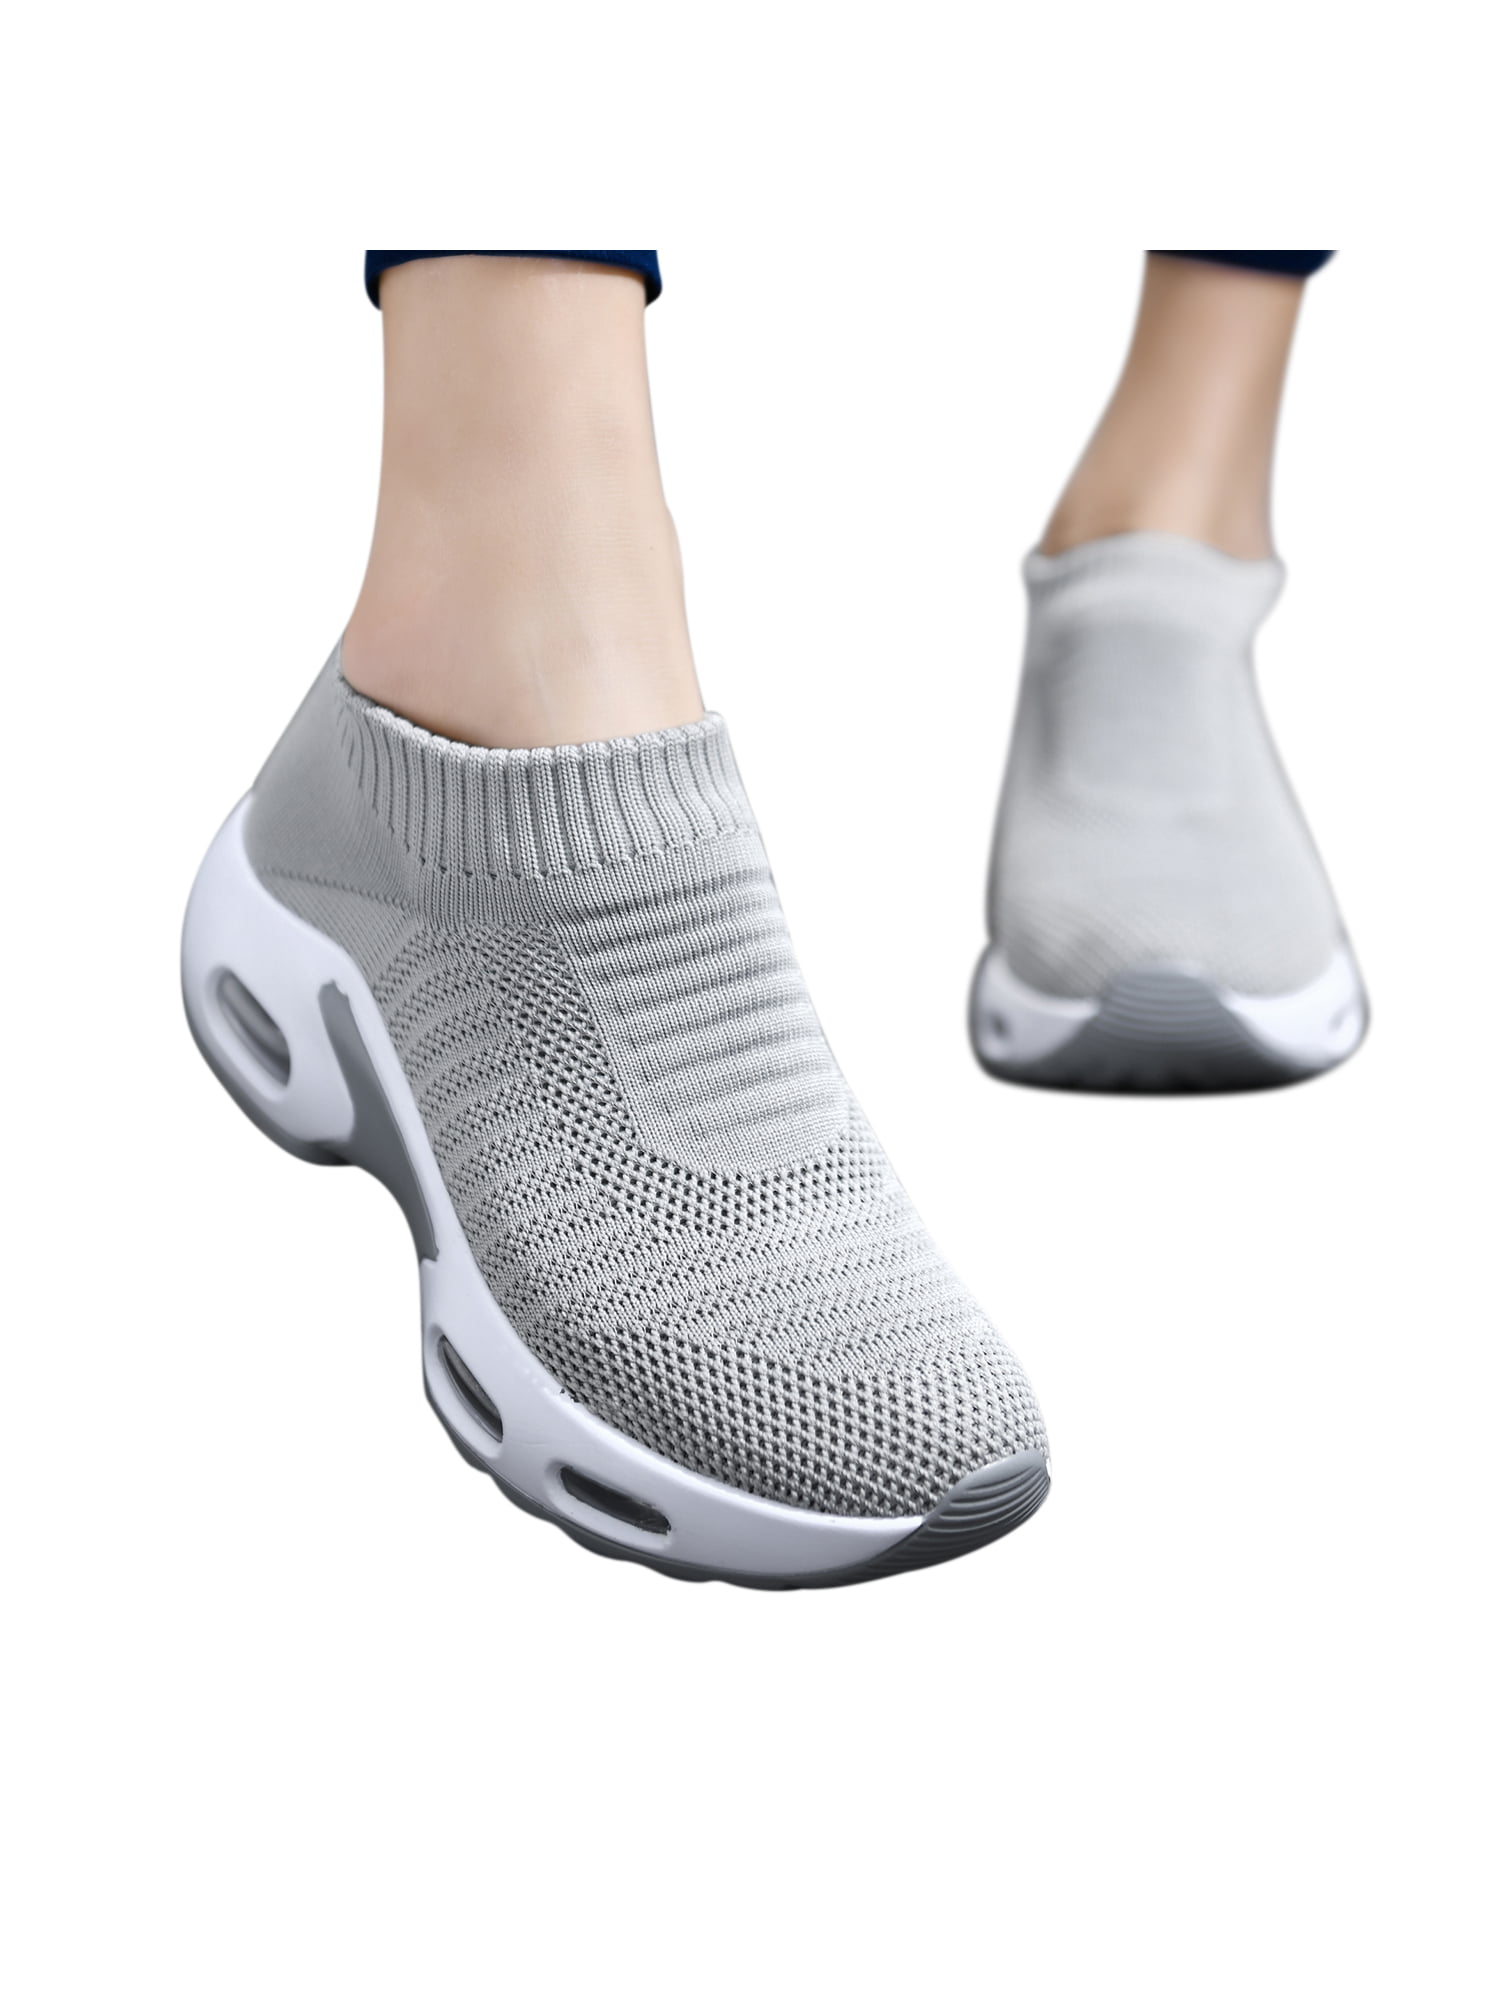 Women Air Cushion Sneakers Mesh Walking Slip-On Running Shoes Breathable Fashion 